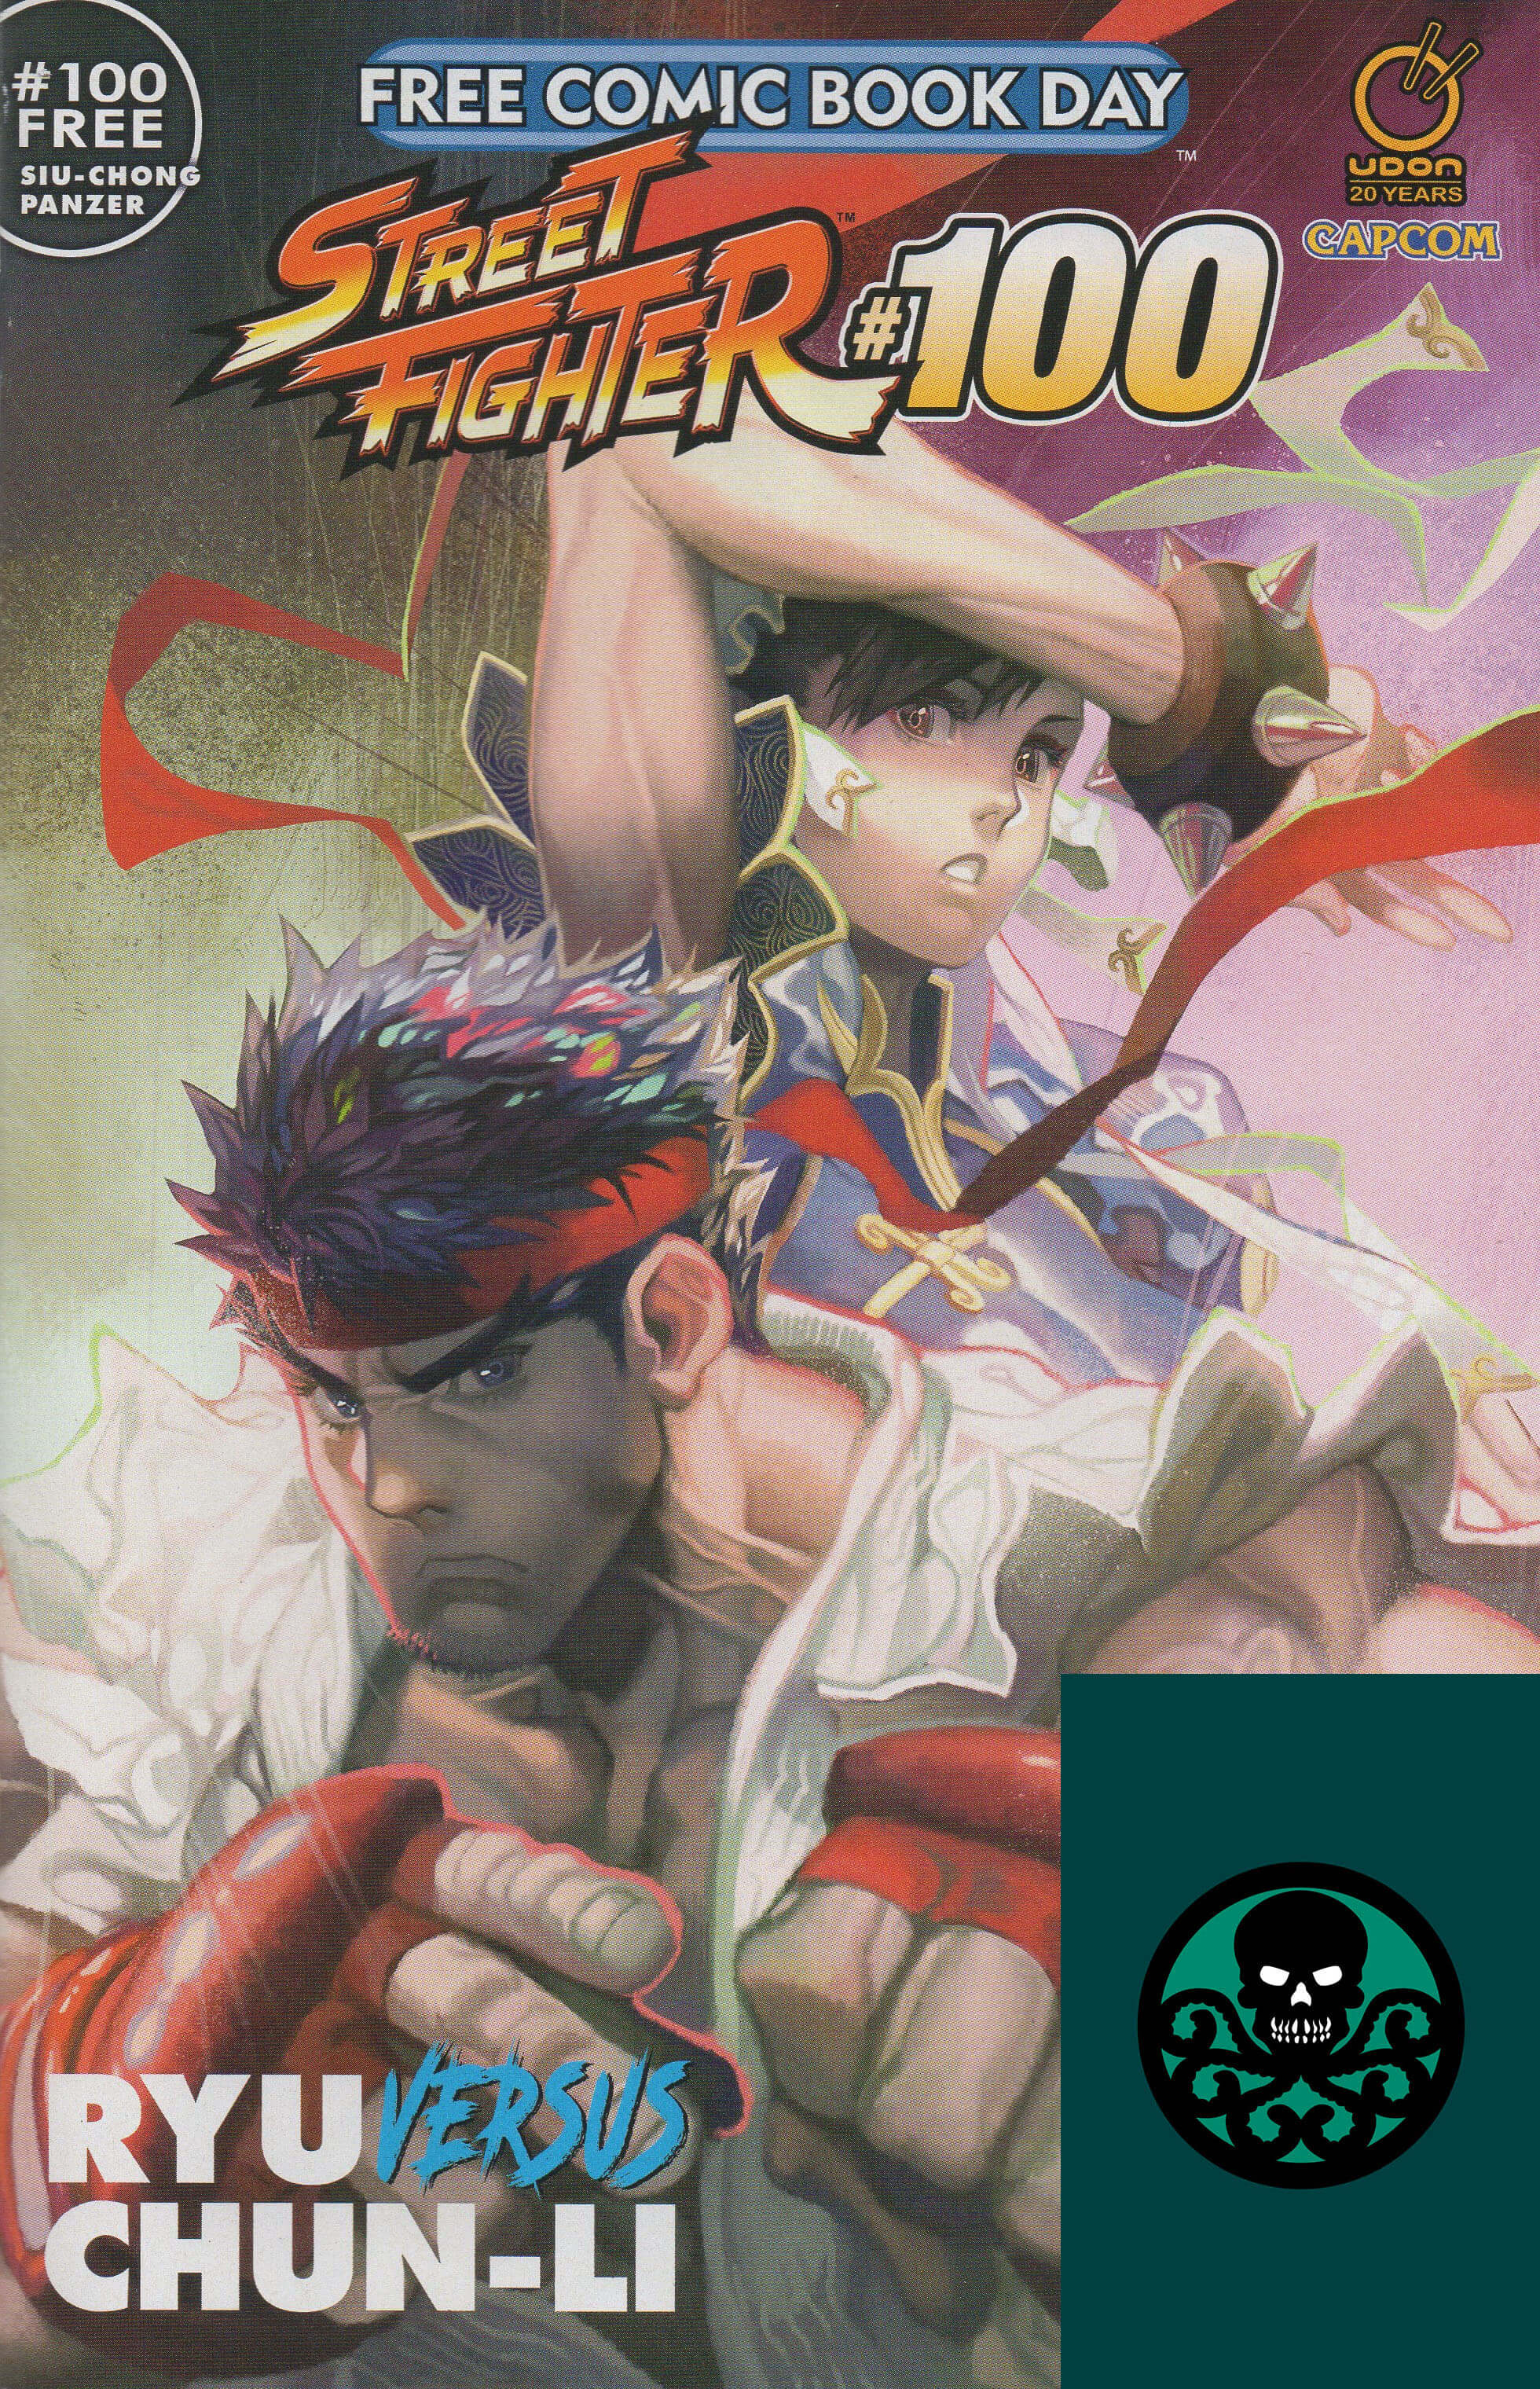 Read online Free Comic Book Day 2020 comic -  Issue # Street Fighter 100 - Ryu vs Chun-Li - 1